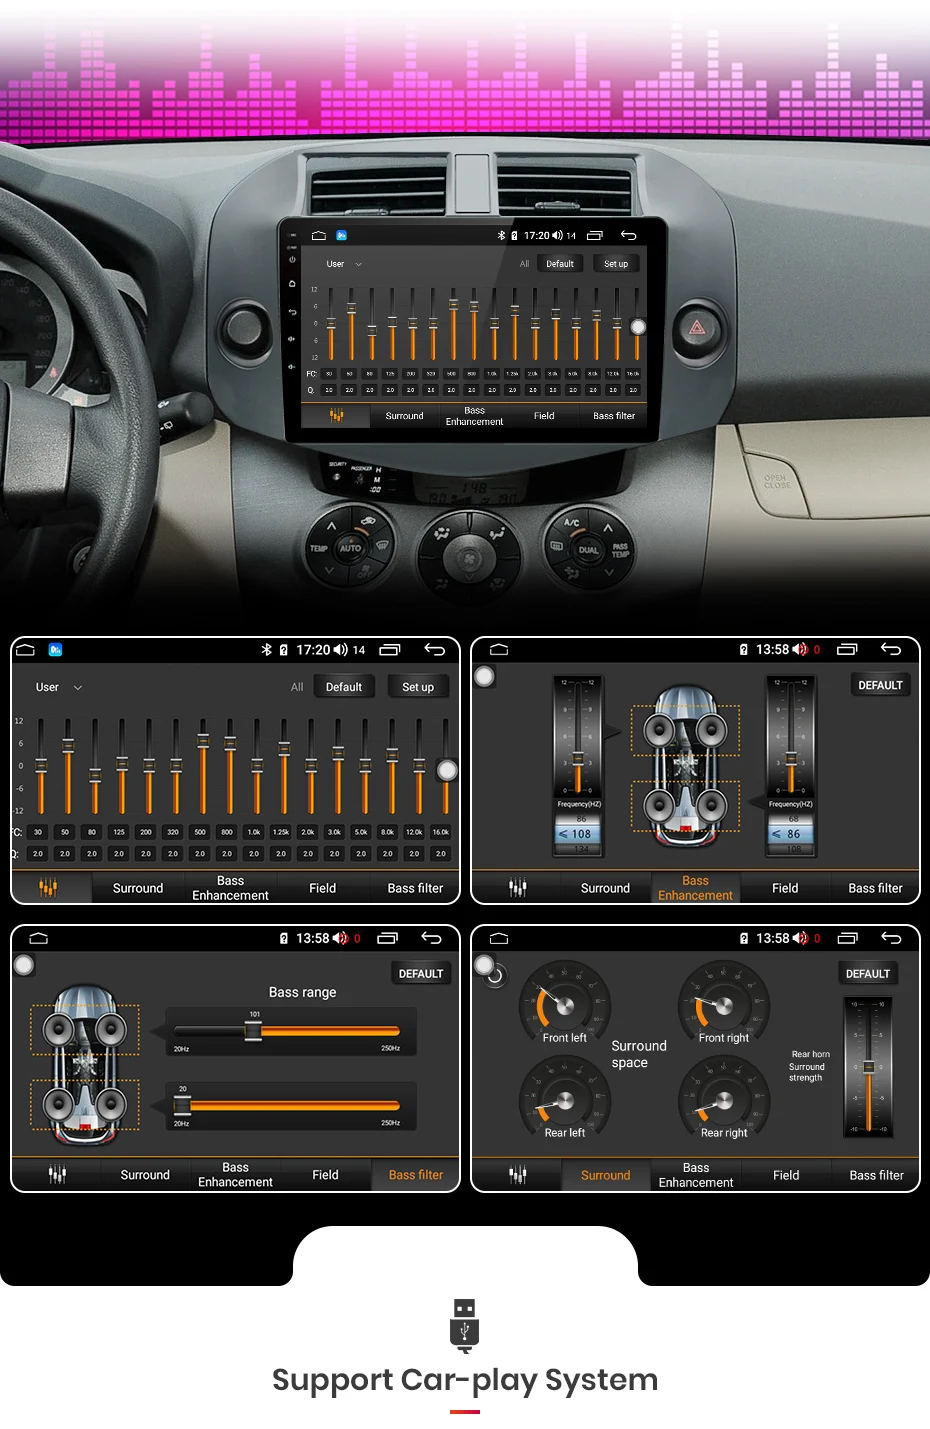 Junsun V1pro 4G+ 64G CarPlay Android 9,0 для Toyota RAV4 2005-2013 автомобильный Радио Мультимедиа Видео плеер навигация gps RDS 2 din dvd